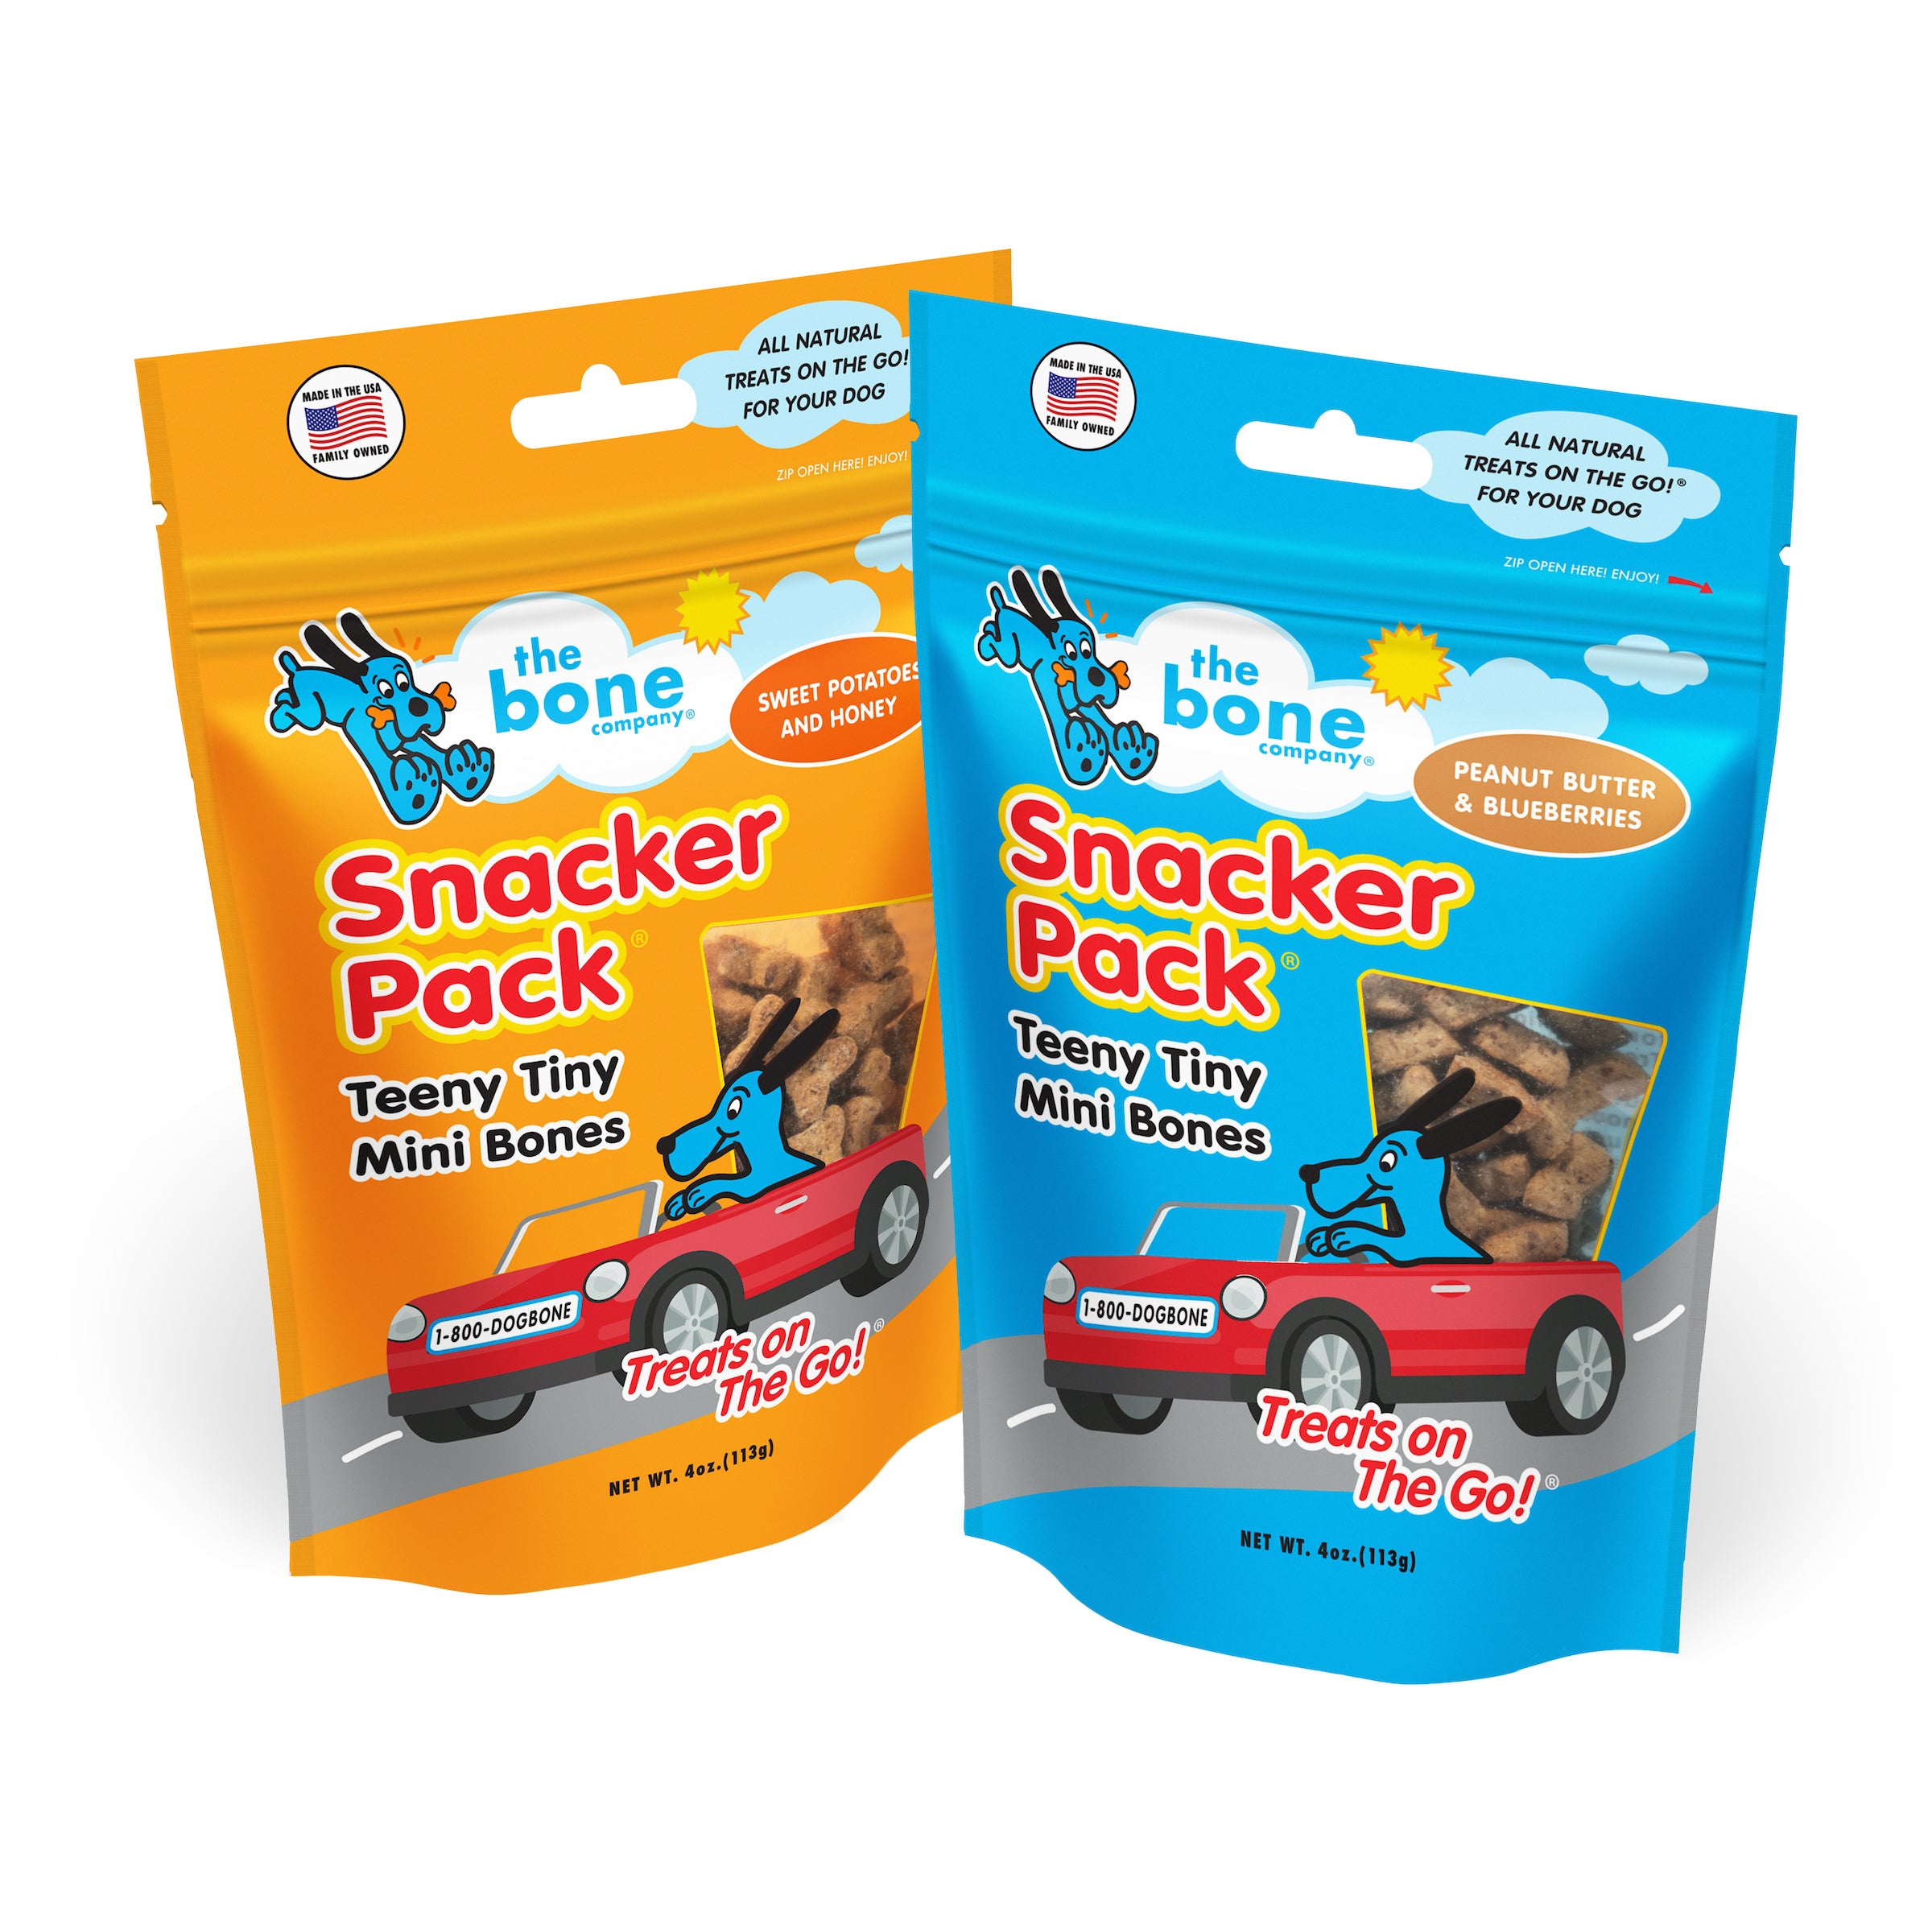 Snacker Pack Treats – Nature's Animals